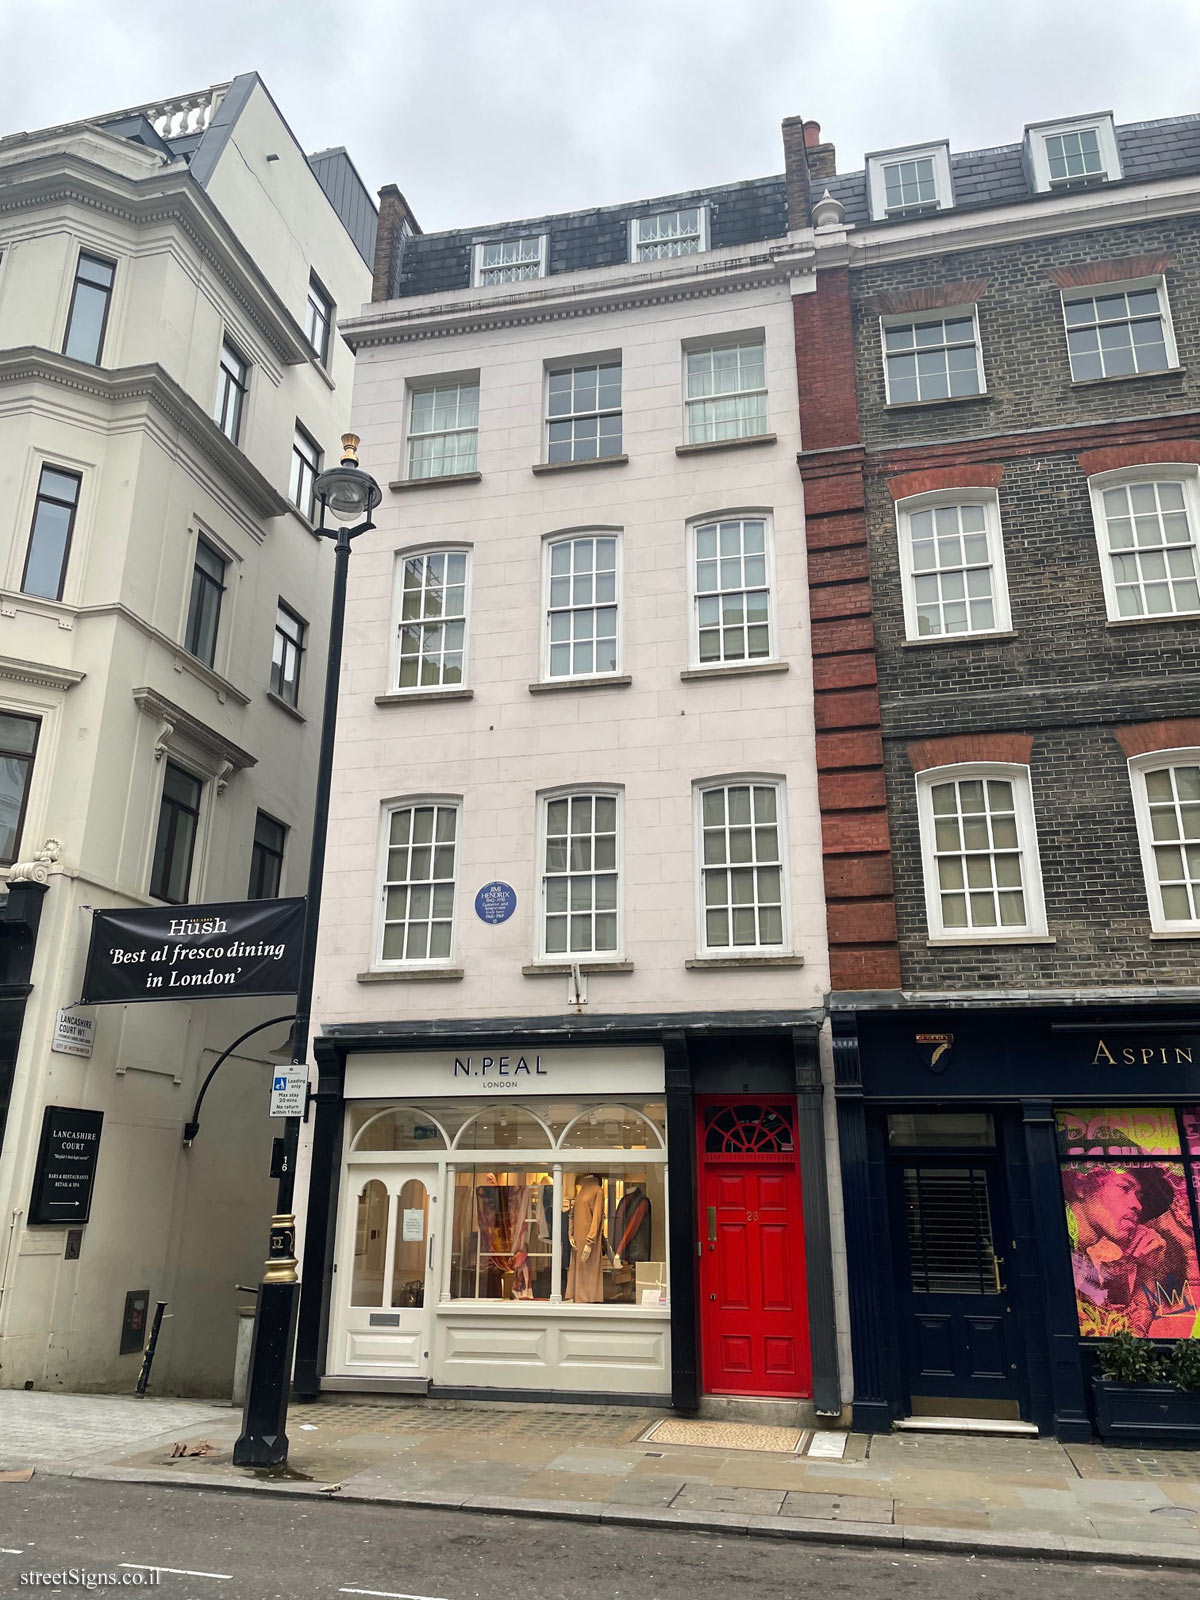 London - English Heritage - The house where Jimmy Hendrix lived - 23 Brook St, Mayfair, London W1K 4HD, UK